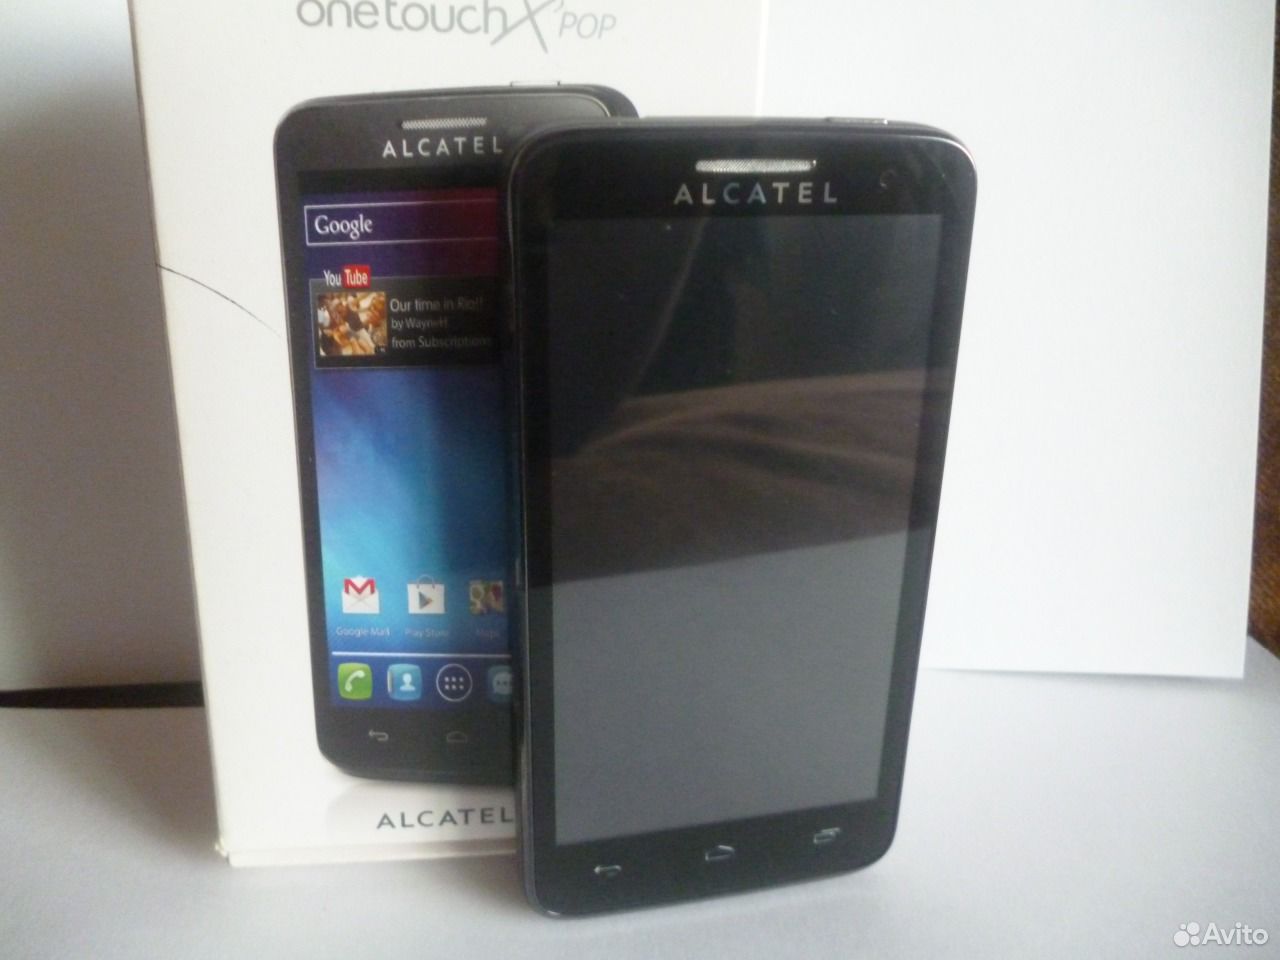 Купить телефон авито спб. Alcatel one Touch x'Pop 5035x год. Авито Санкт-Петербург купить смартфон бу недорого.